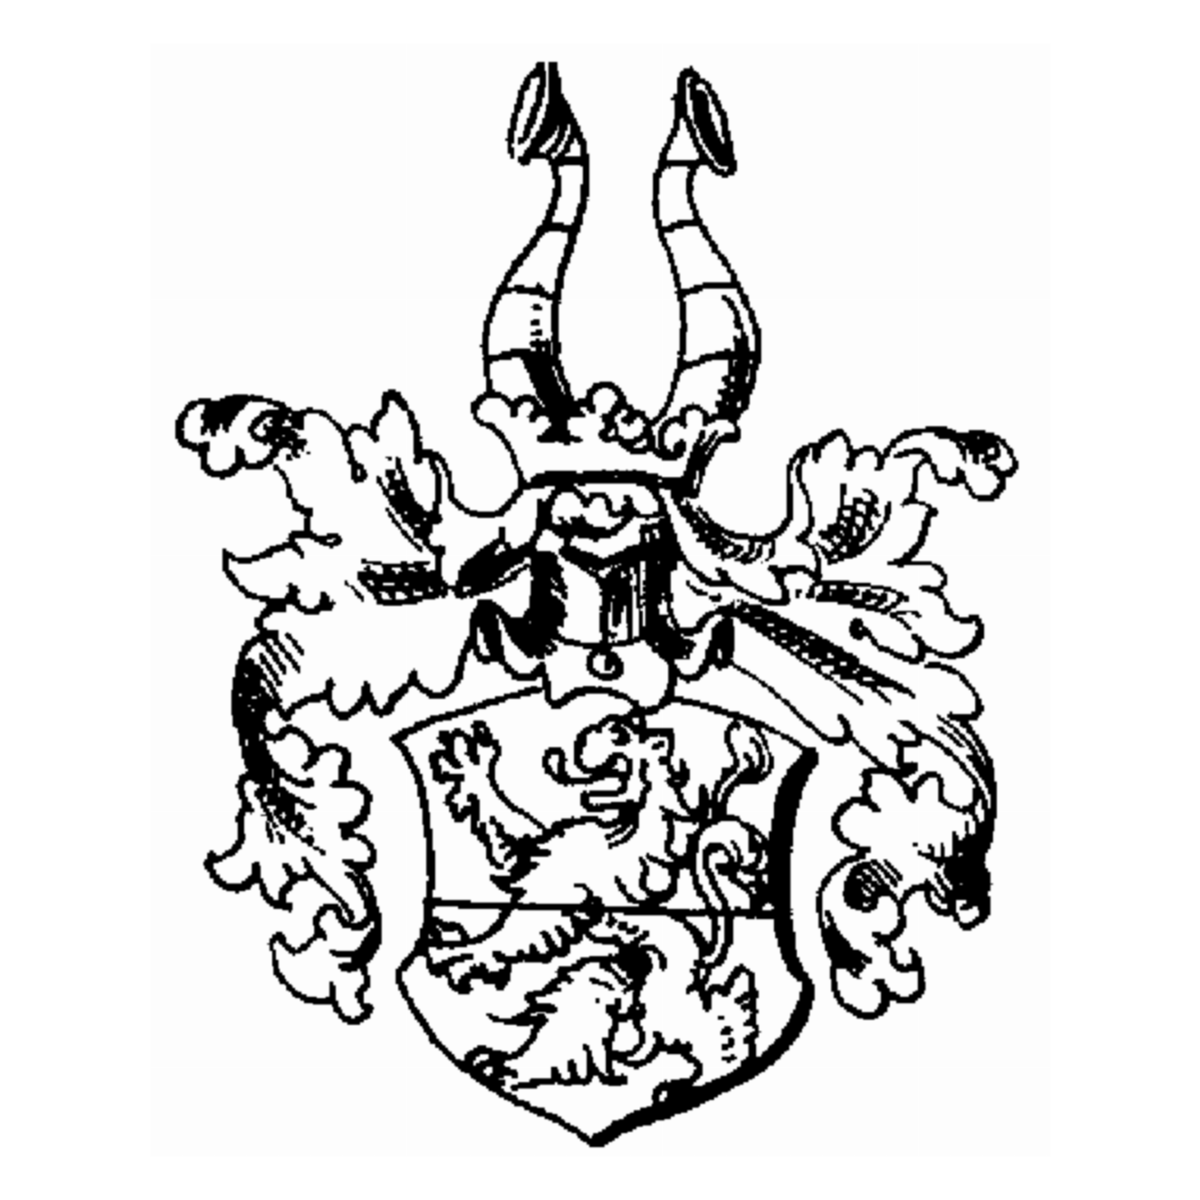 Wappen der Familie Stark